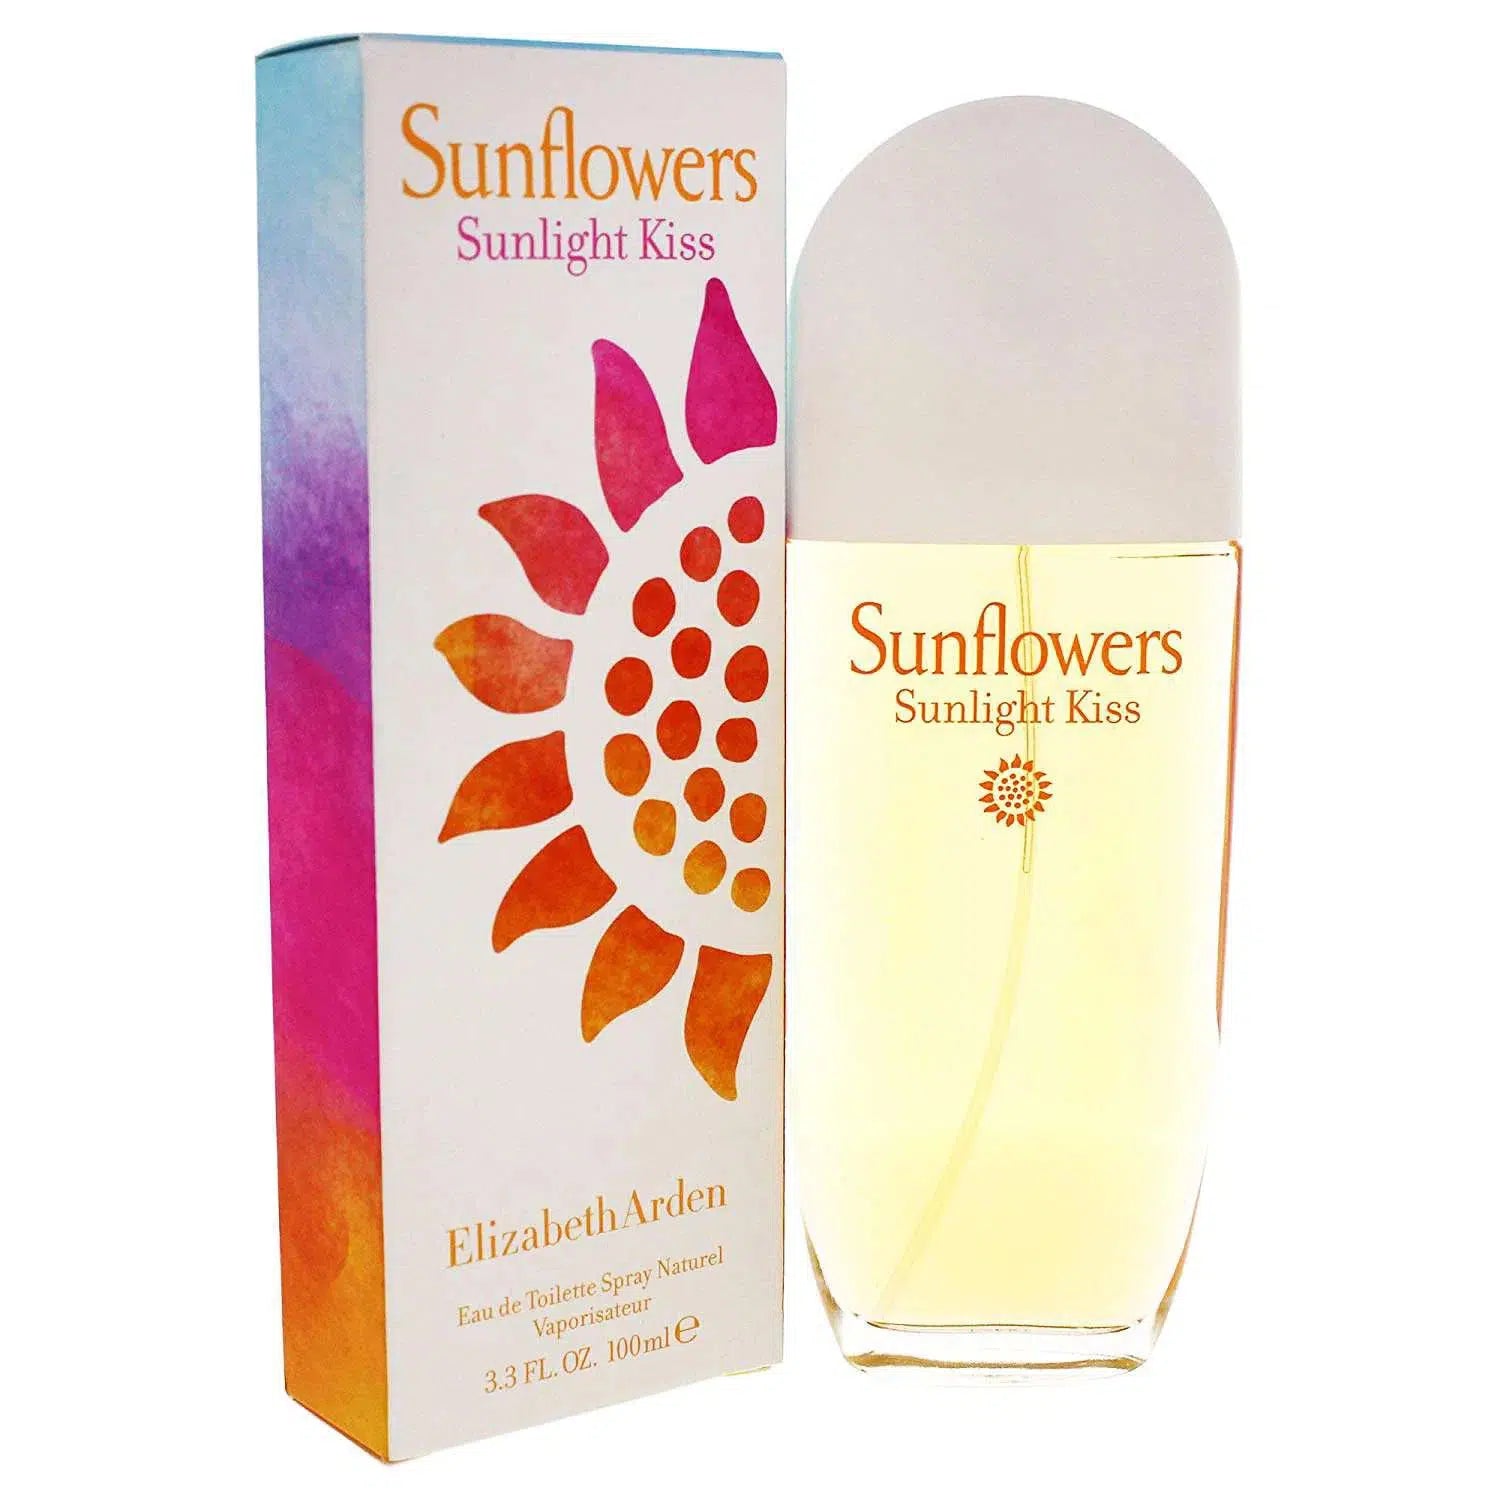 Elizabeth Arden Sunflowers Sunlight Kiss 100ml - Perfume Philippines